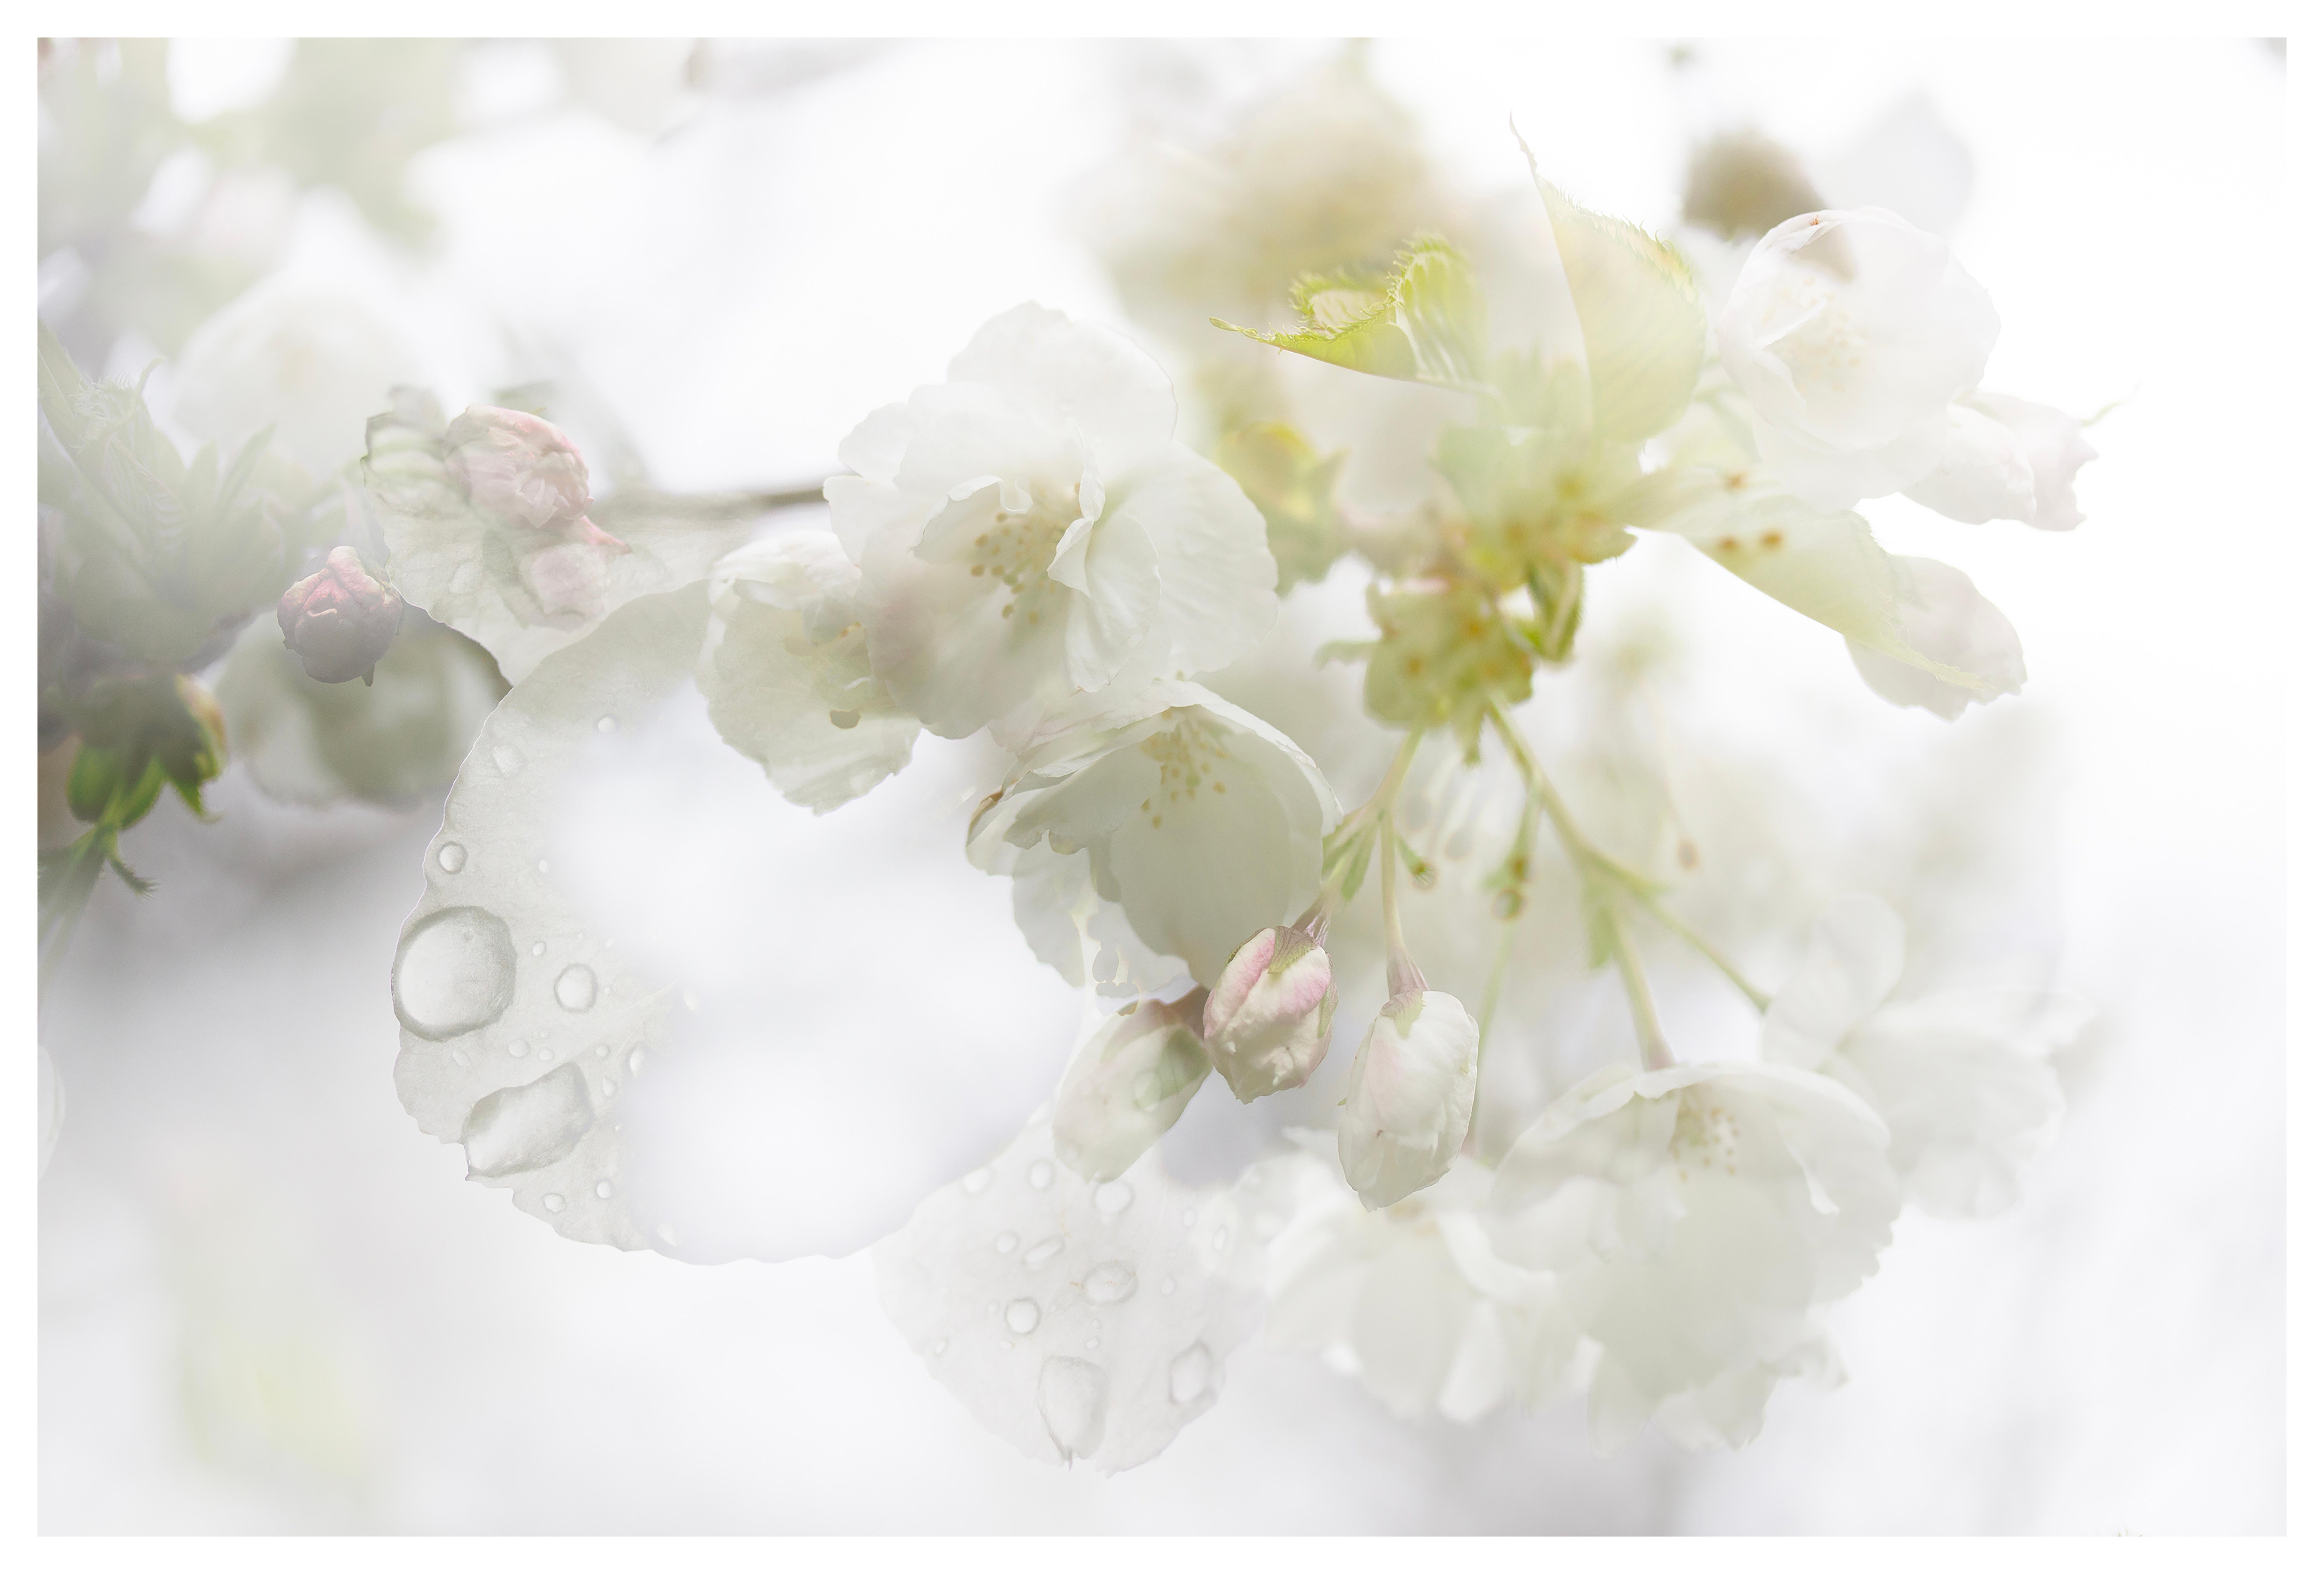 Sophia Milligan Abstract Photograph - 'Spring Rain' Photograph Cherry blossom Sakura flowers green white nature